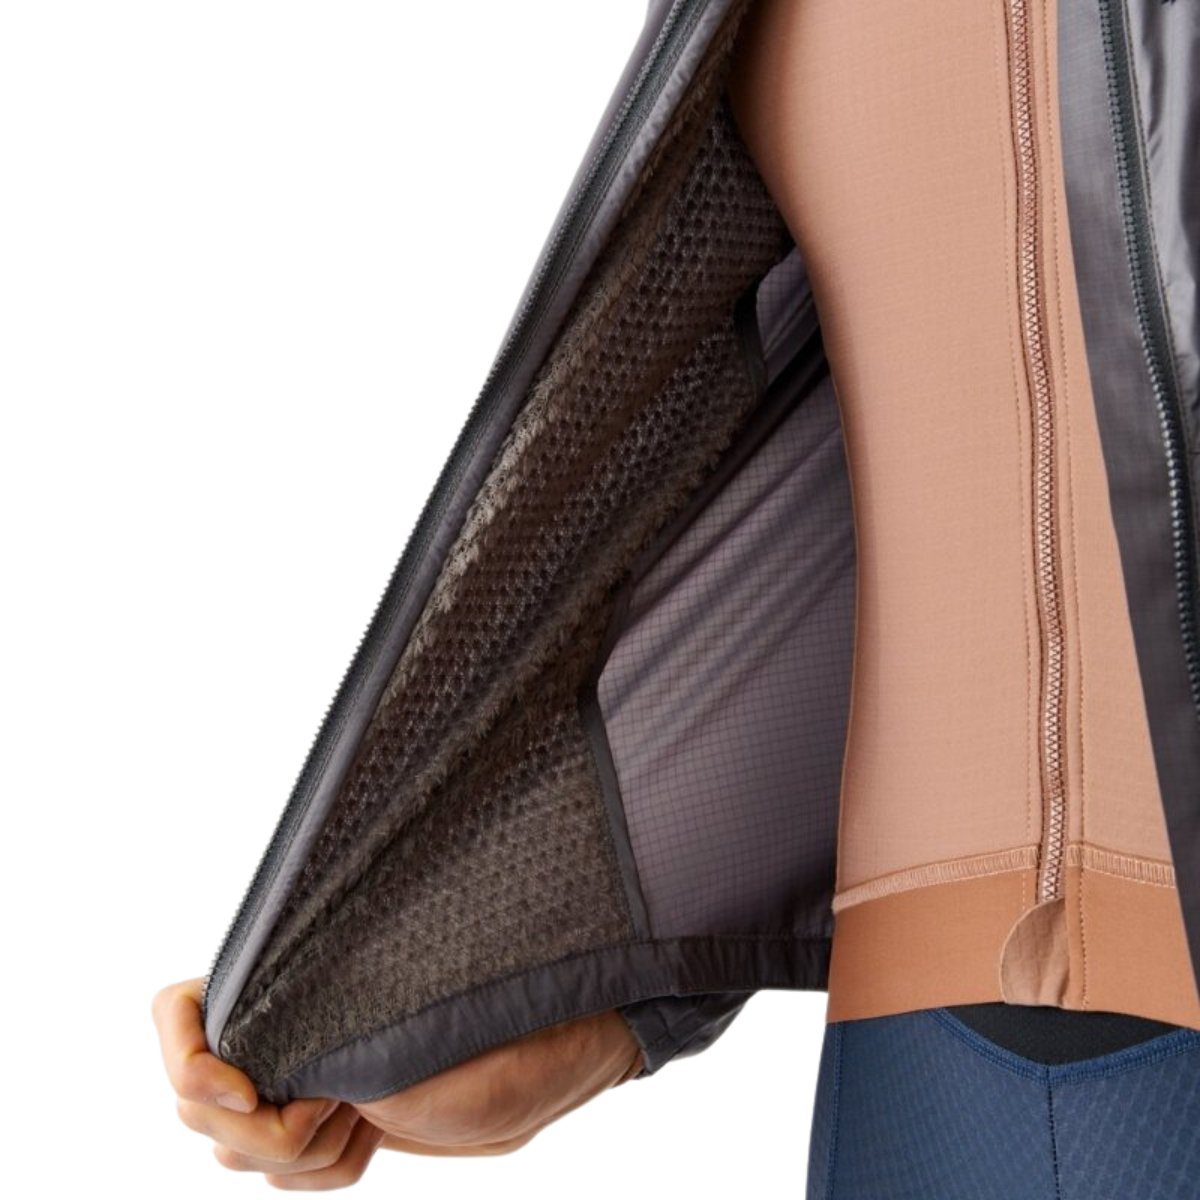 Men's Essential Insulated Jacket — Grey